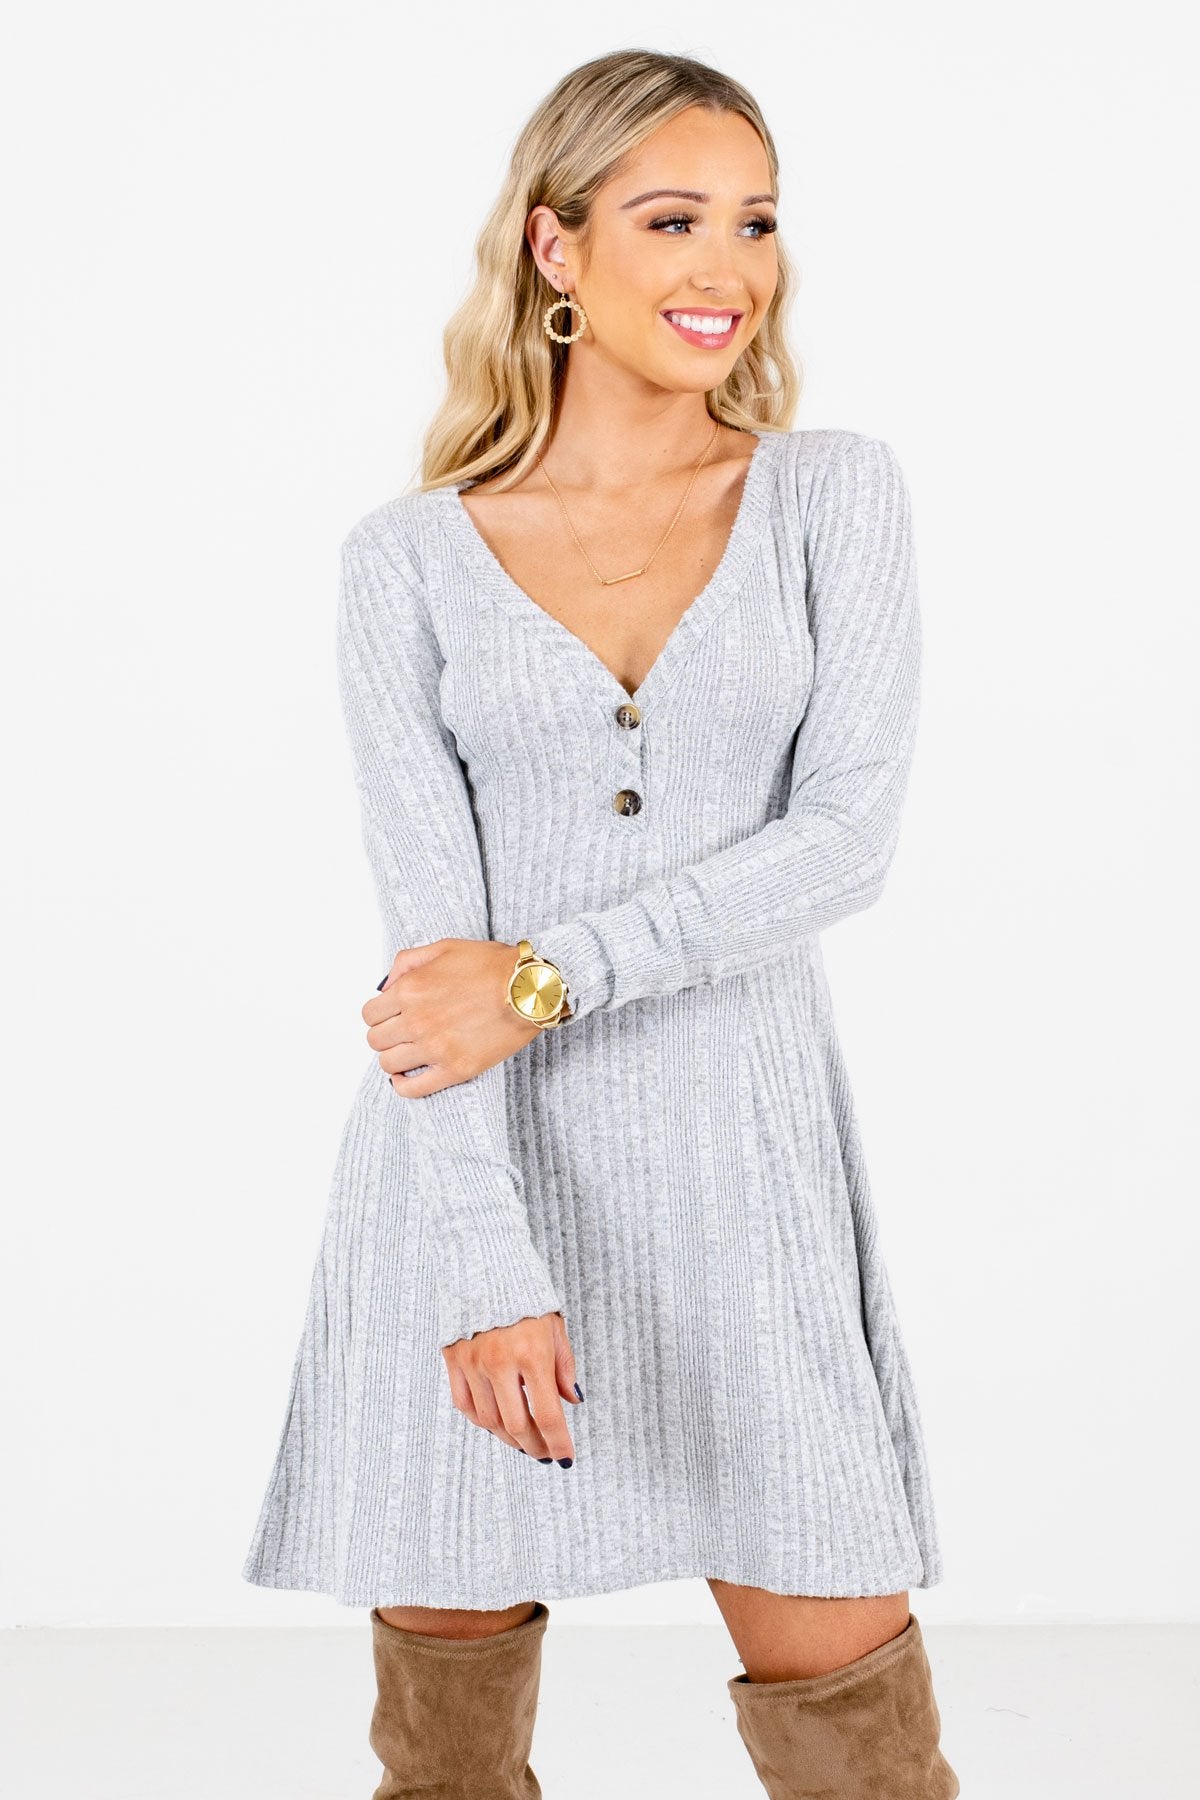 Women’s Heather Gray Warm and Cozy Boutique Mini Dress